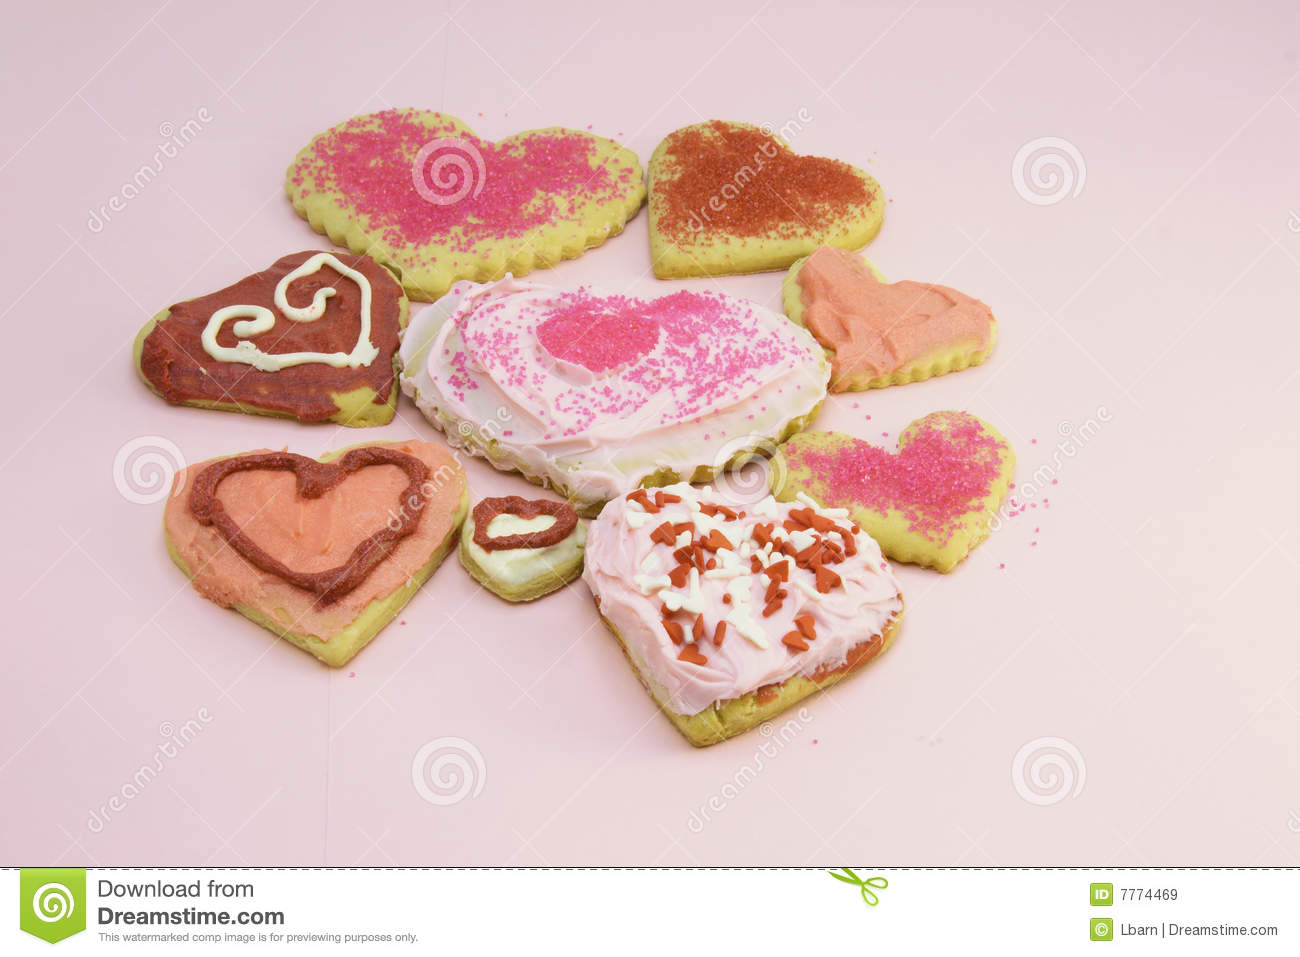 Variety Of Valentine Sugar Cookies On A Pink Background 